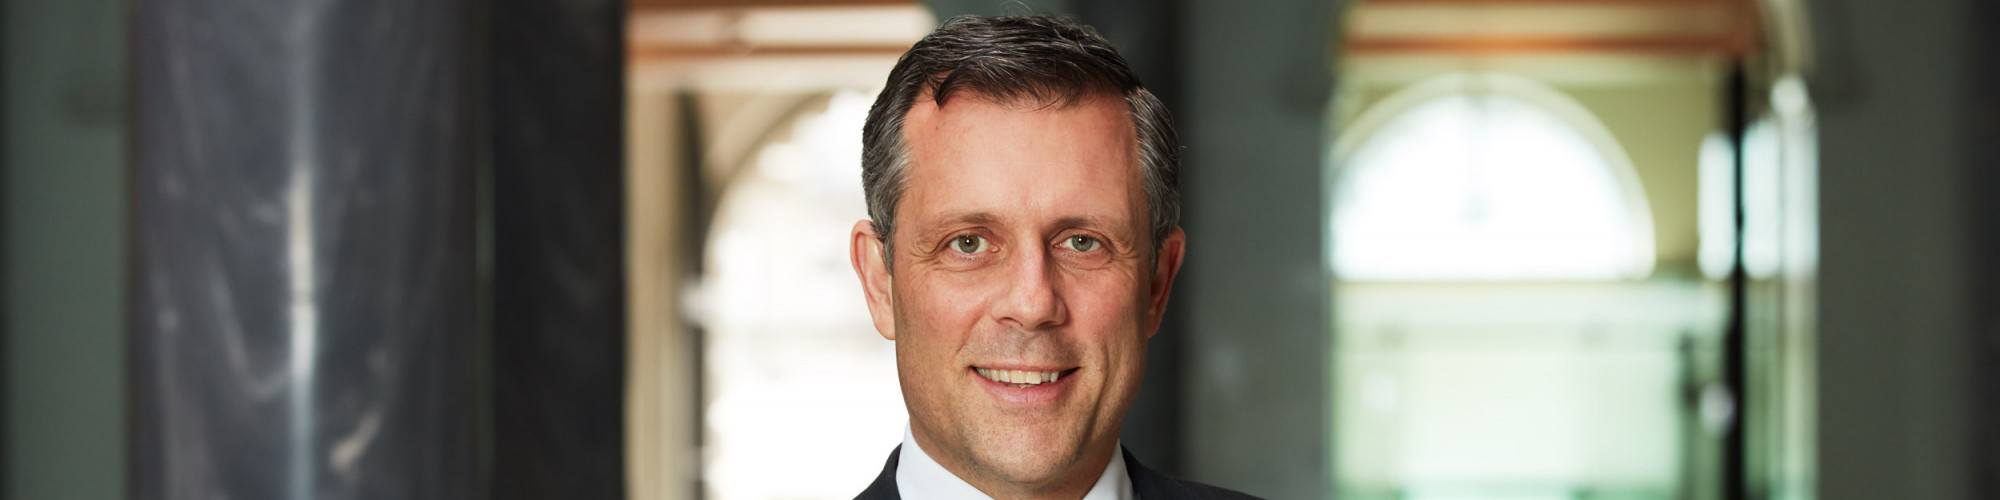 André Helfenstein, CEO Credit Suisse (Schweiz) AG